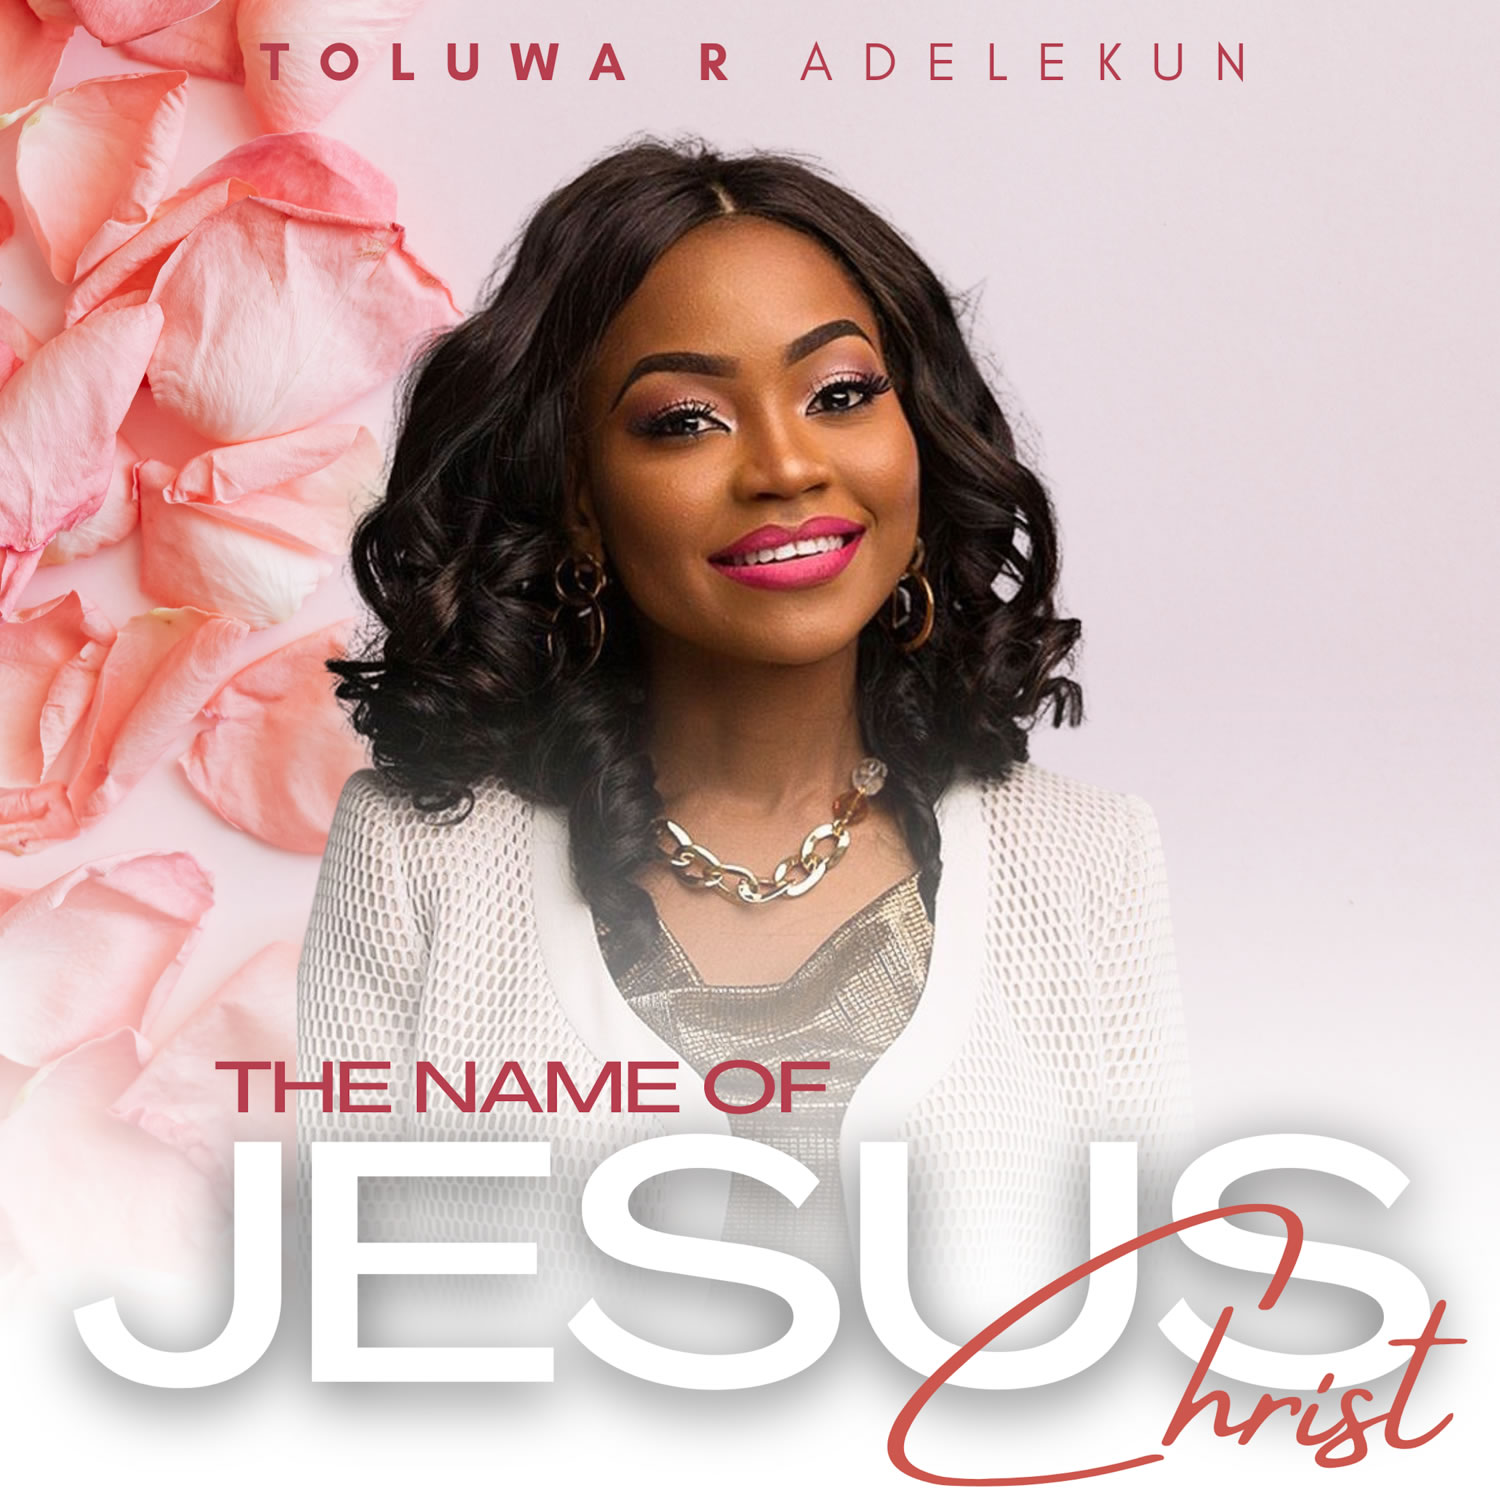 Toluwa Adelekun - The Name of Jesus Christ (Artwork)